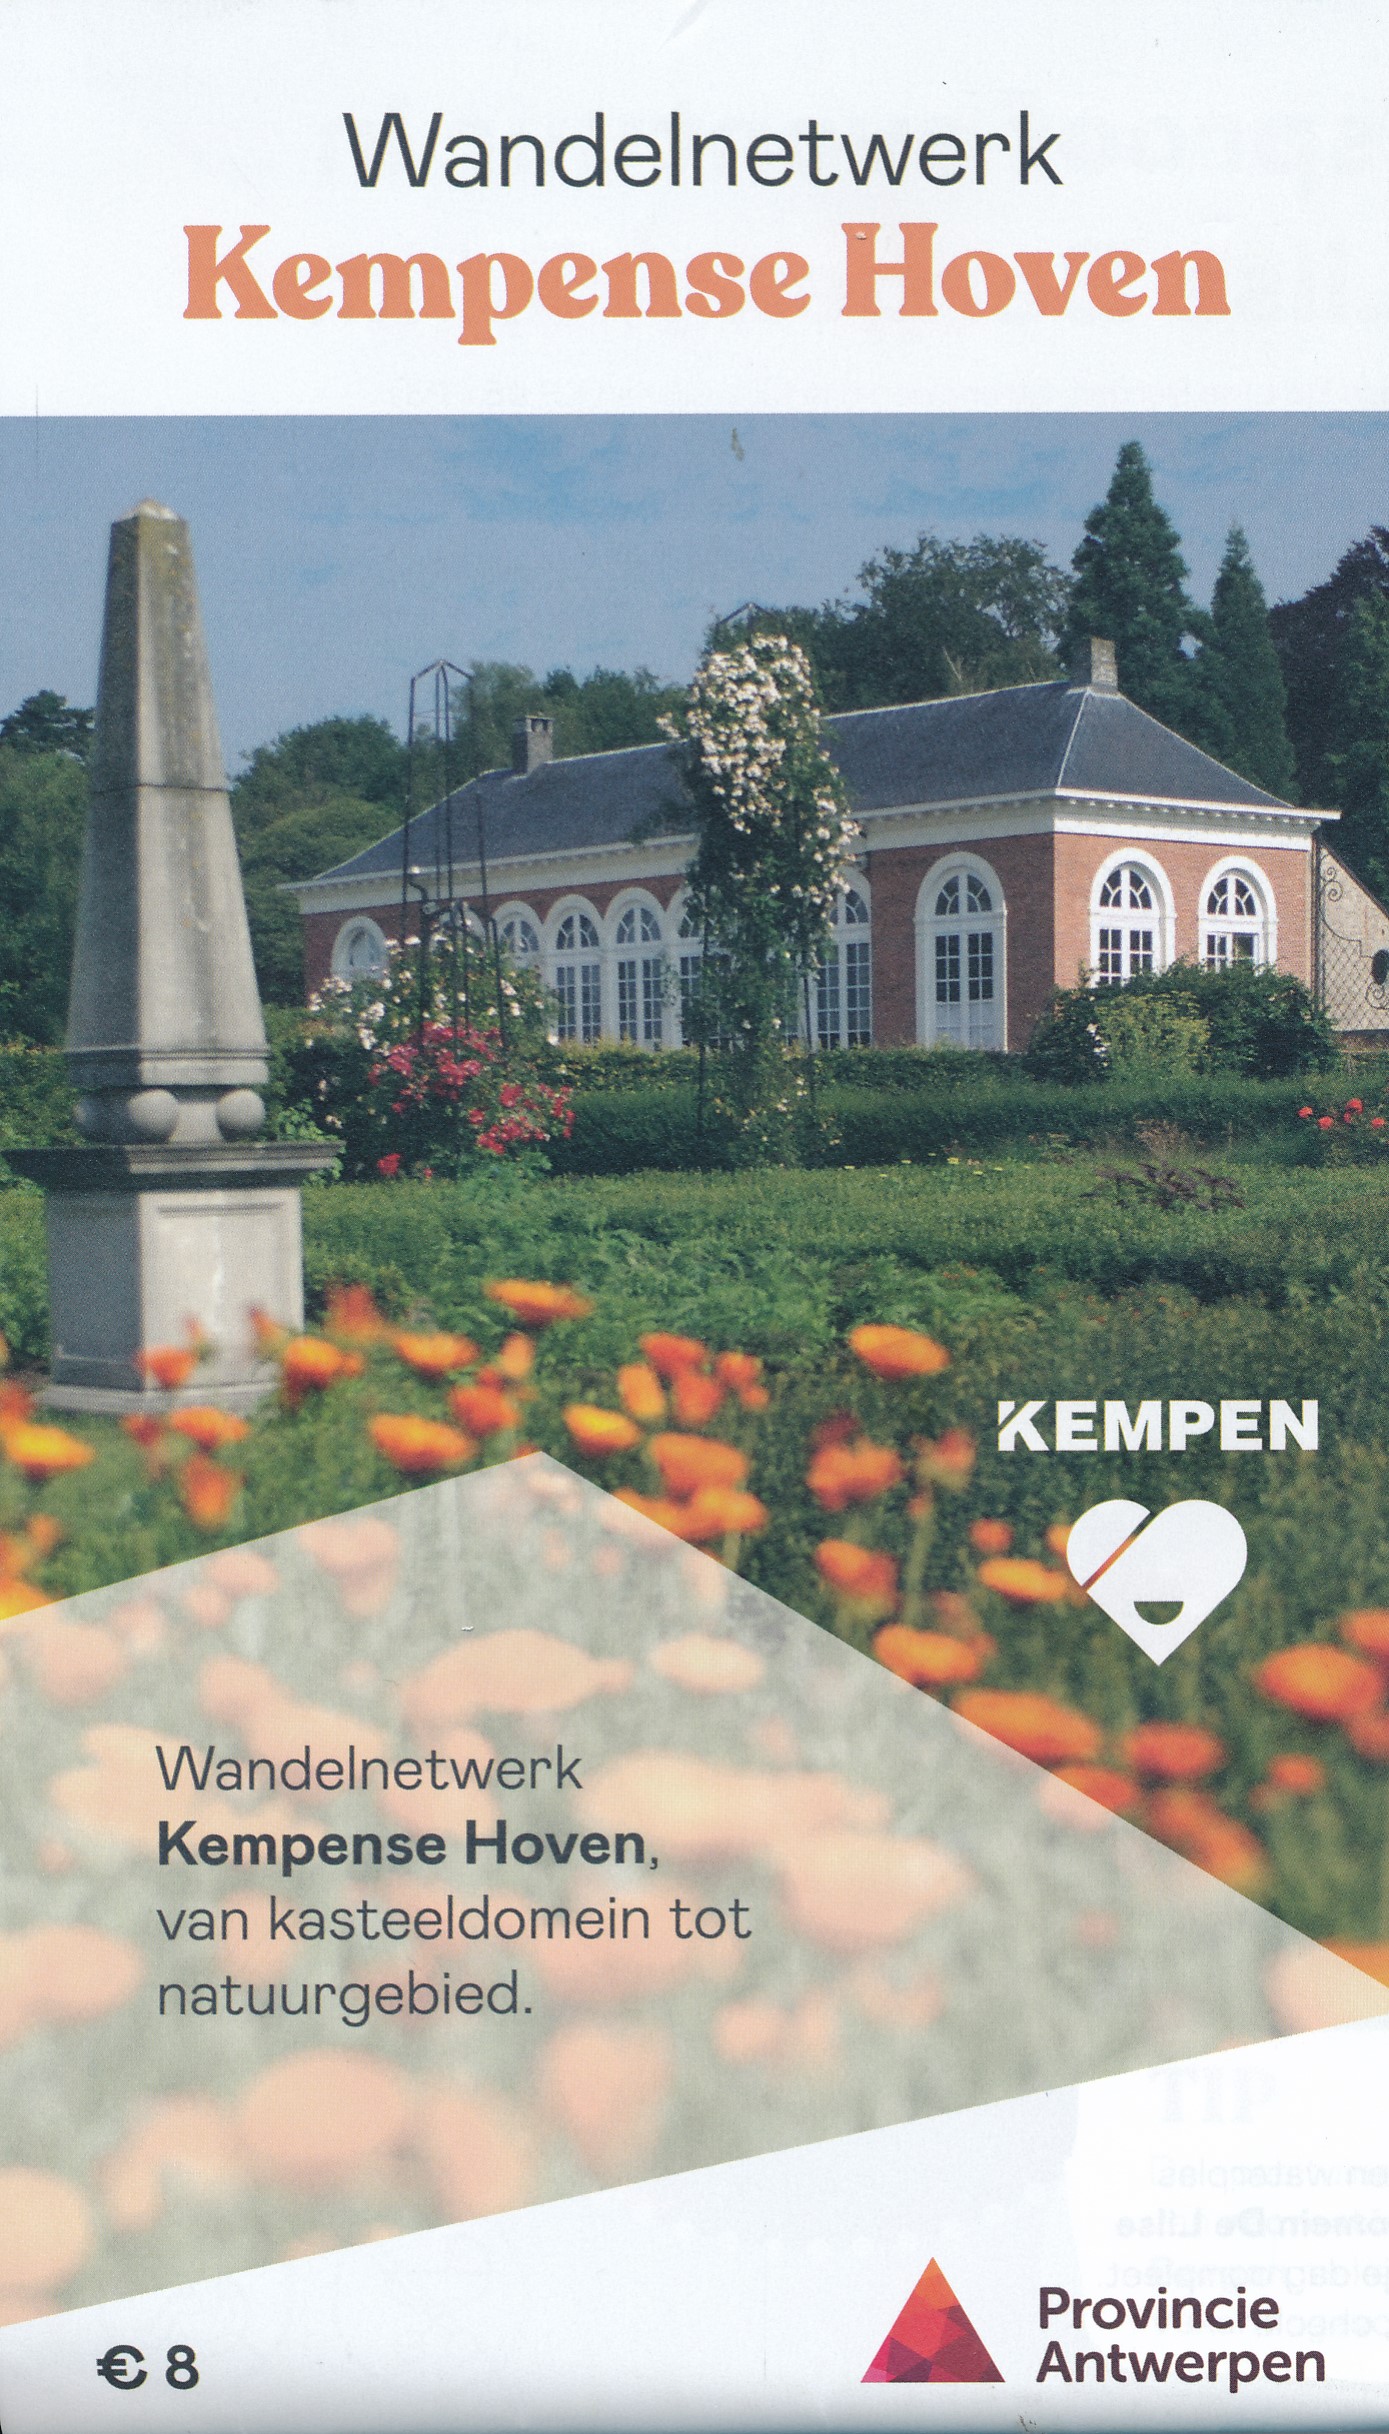 Online bestellen: Wandelknooppuntenkaart Wandelnetwerk BE Kempense Hoven | Provincie Antwerpen Toerisme